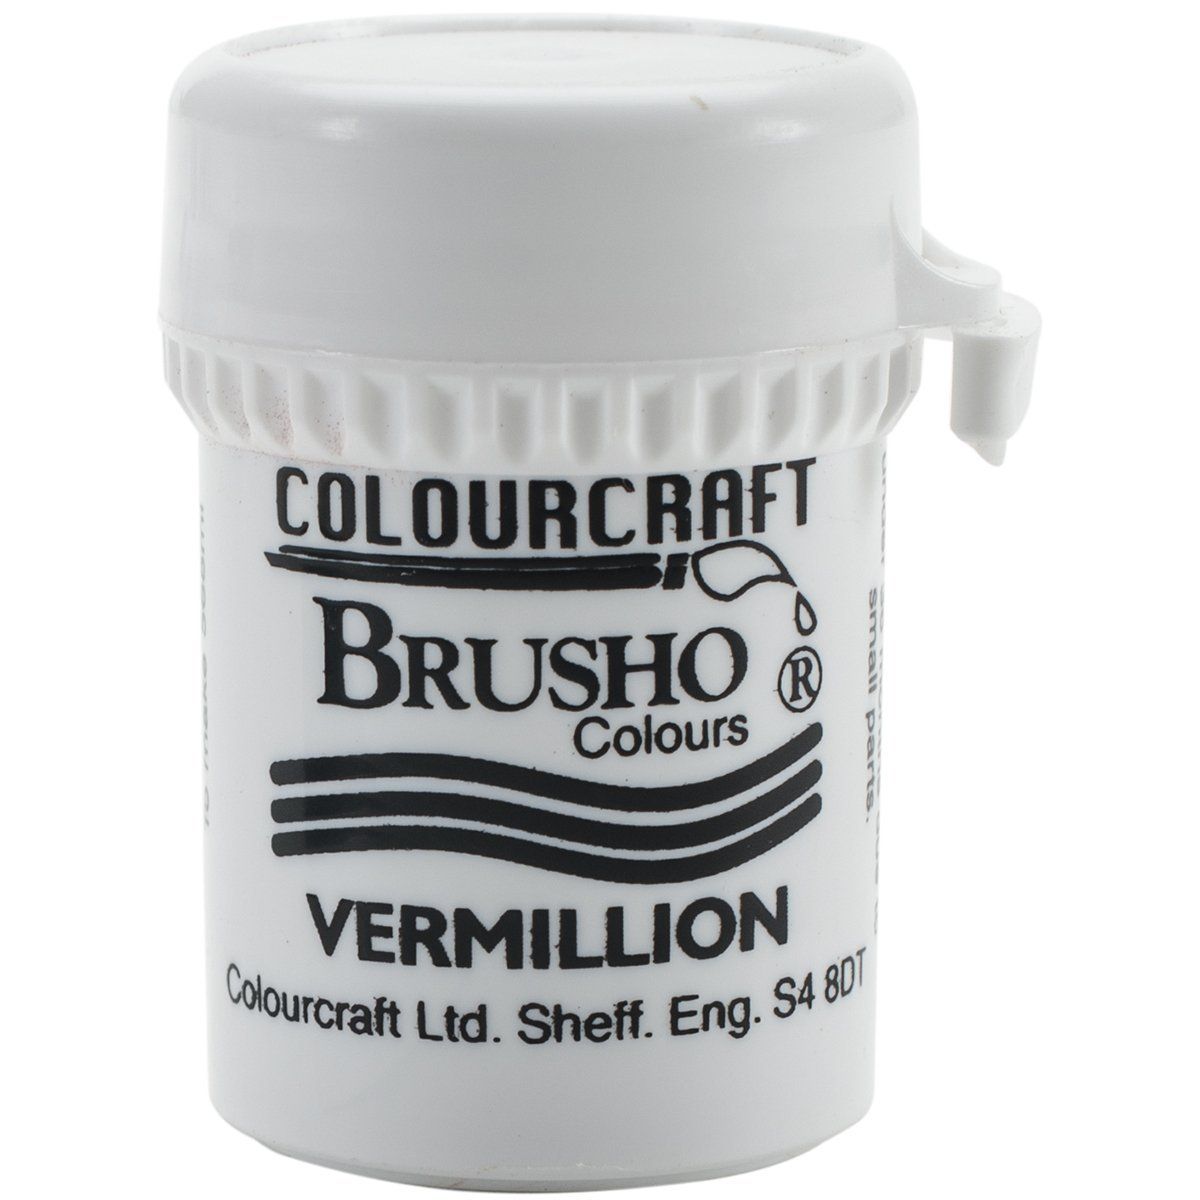 Brusho Crystal Colour - Vermillion 15 gm